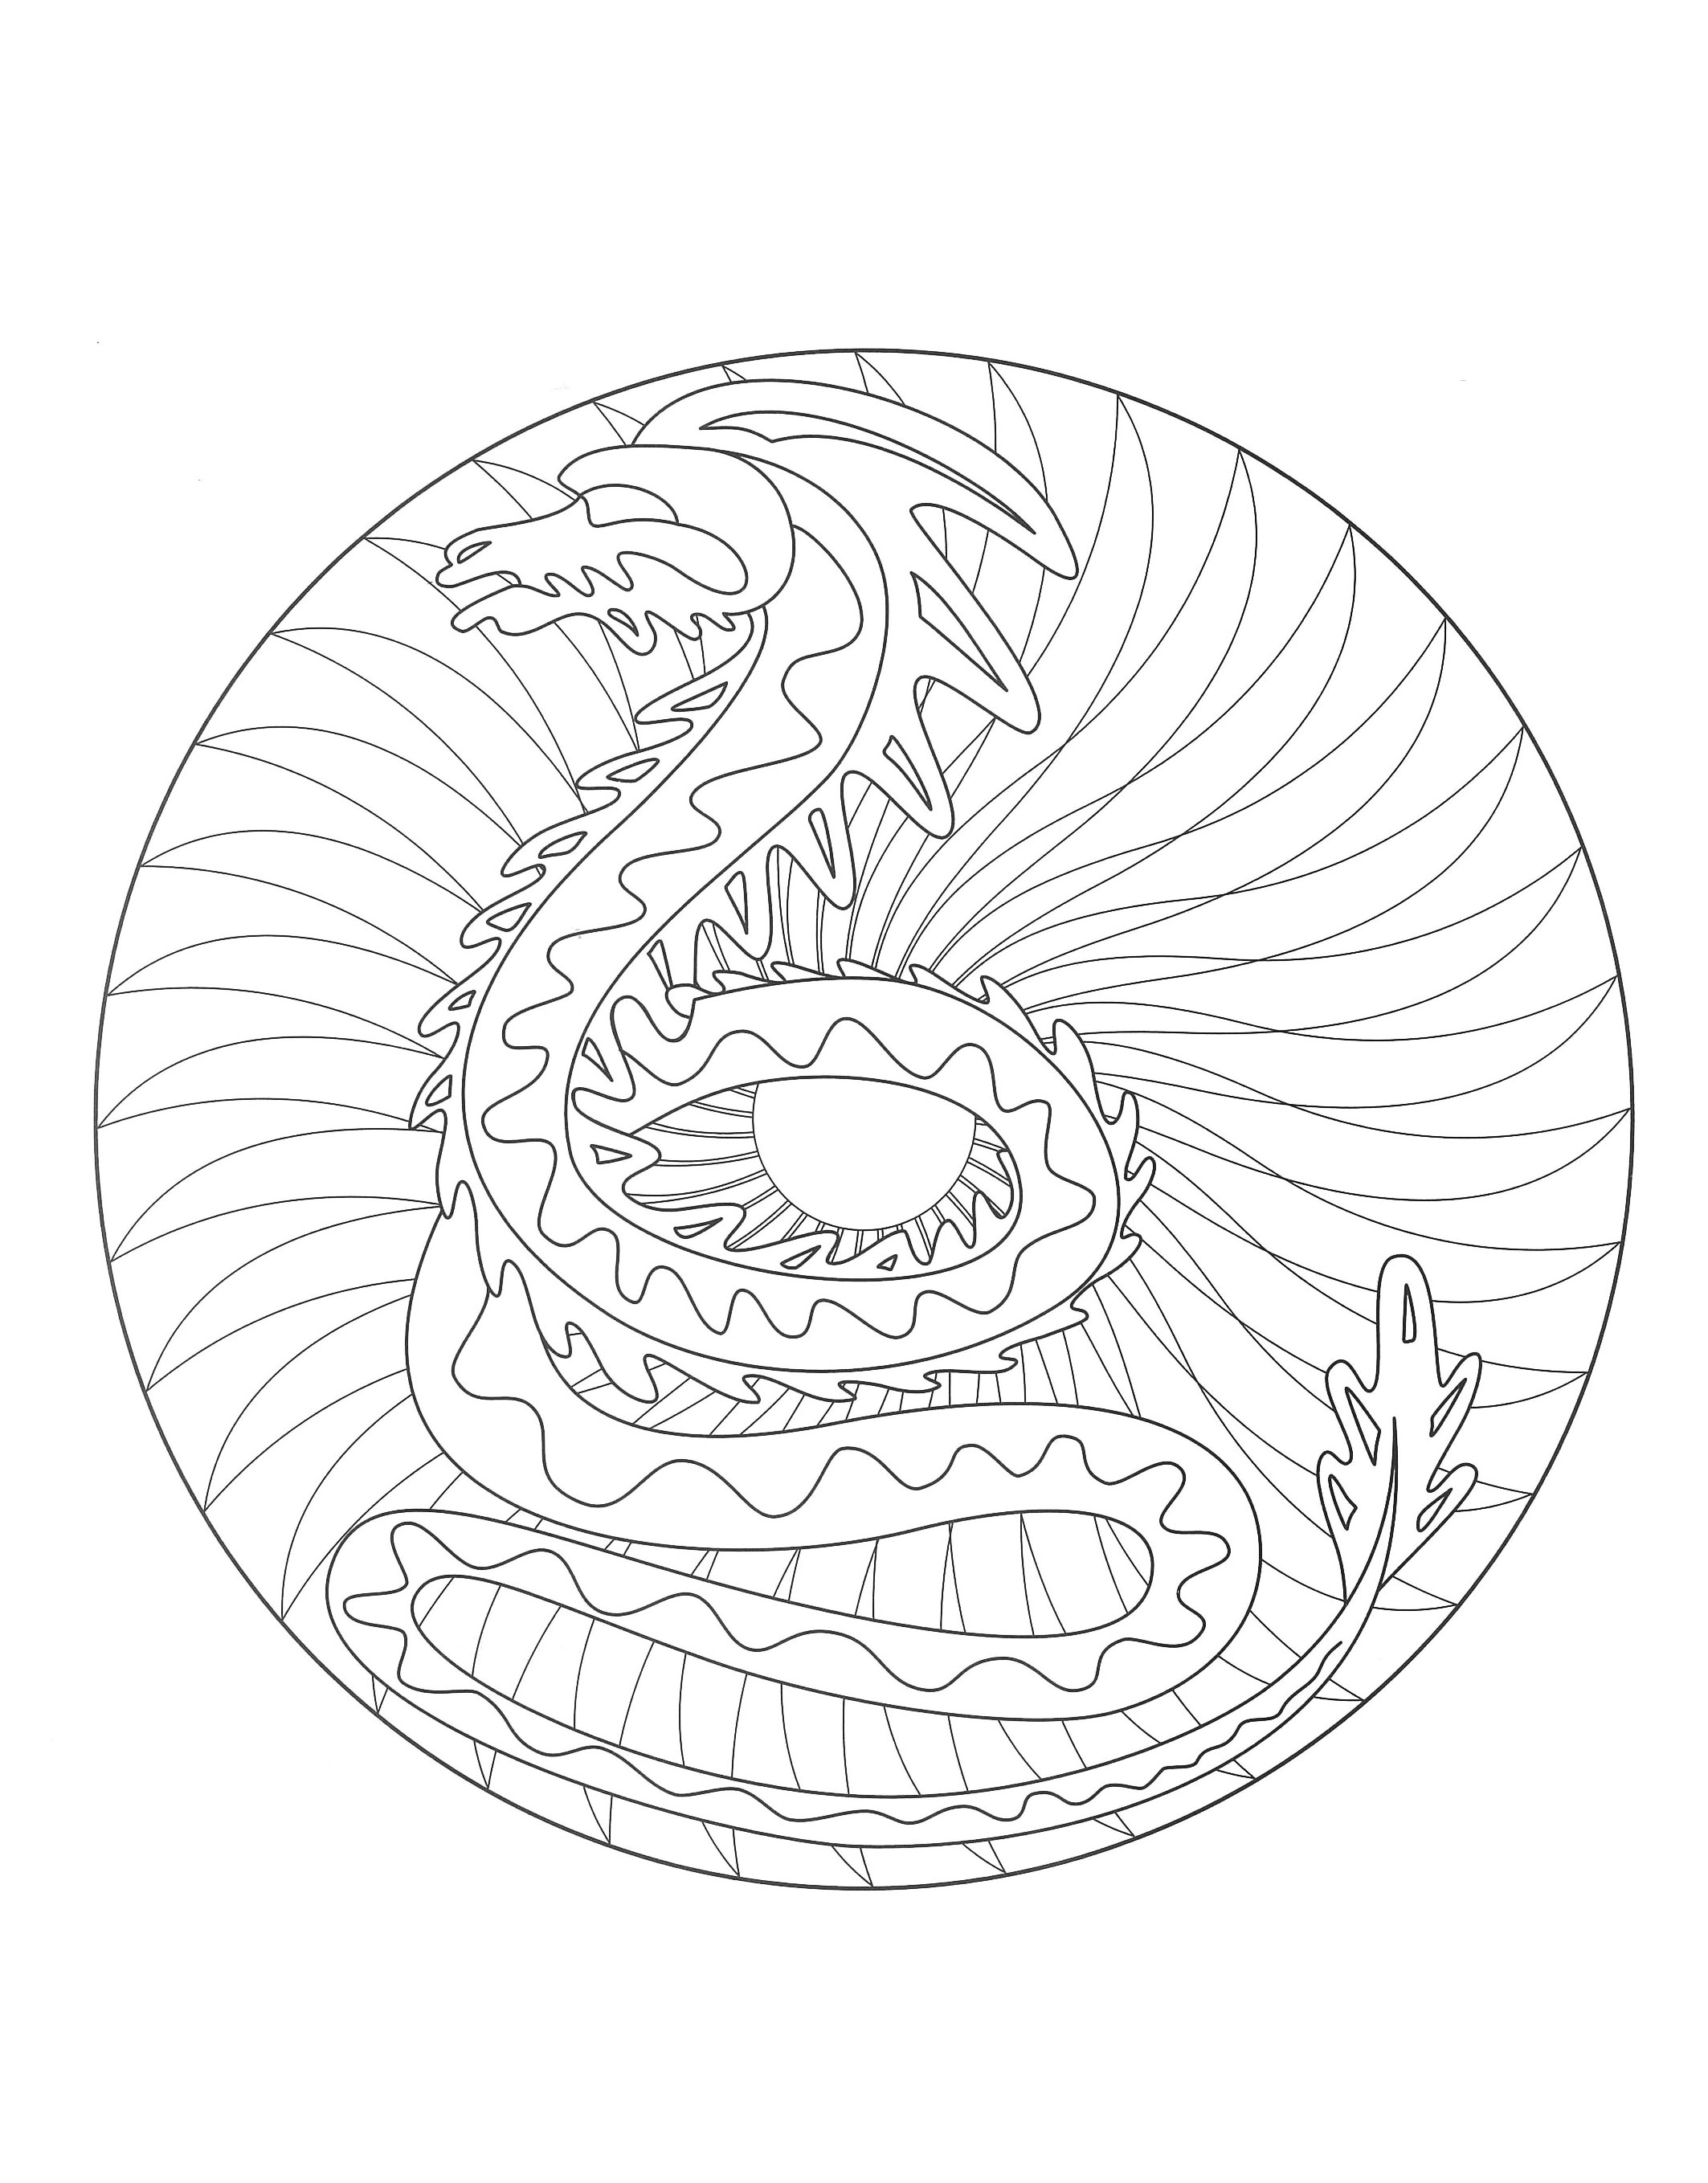 Mandalas coloring page to download